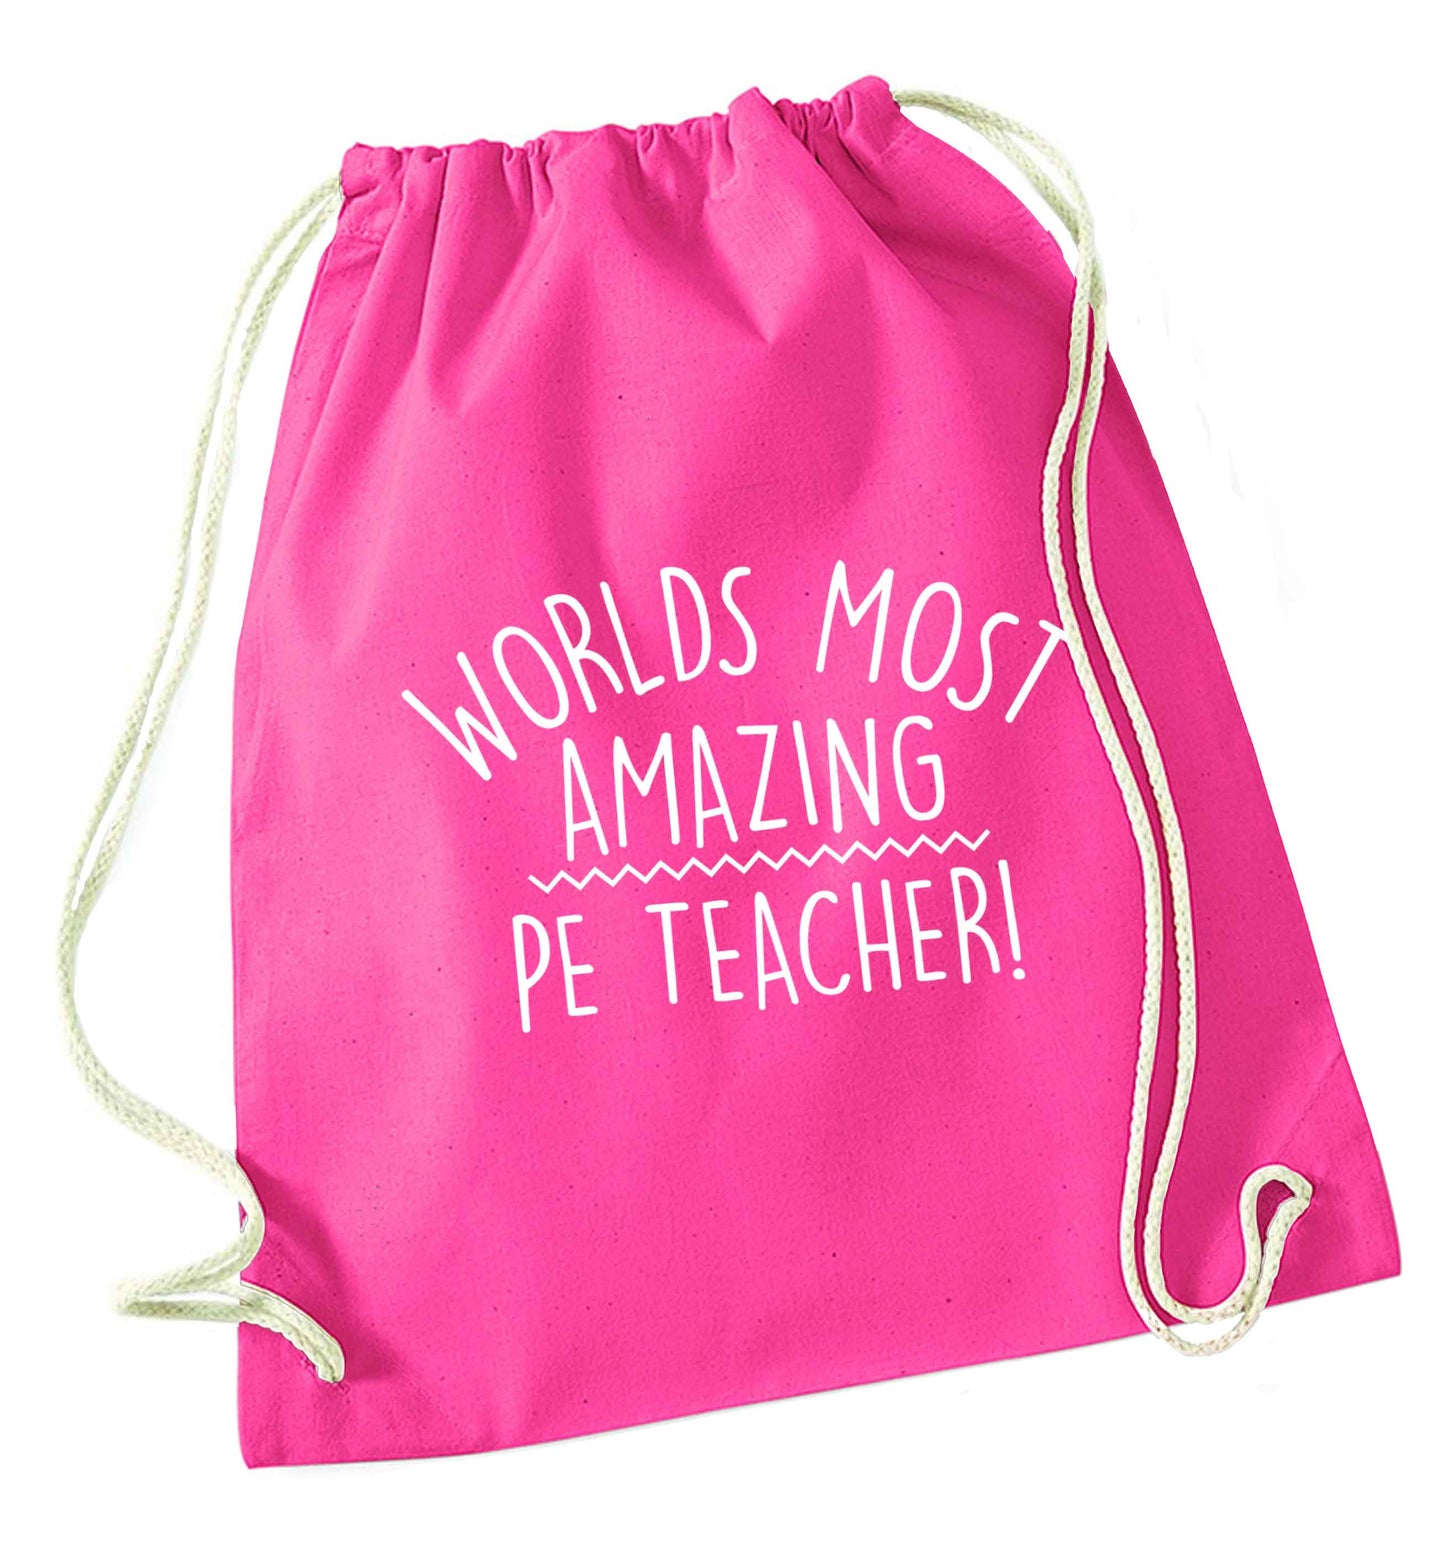 Worlds most amazing PE teacher pink drawstring bag